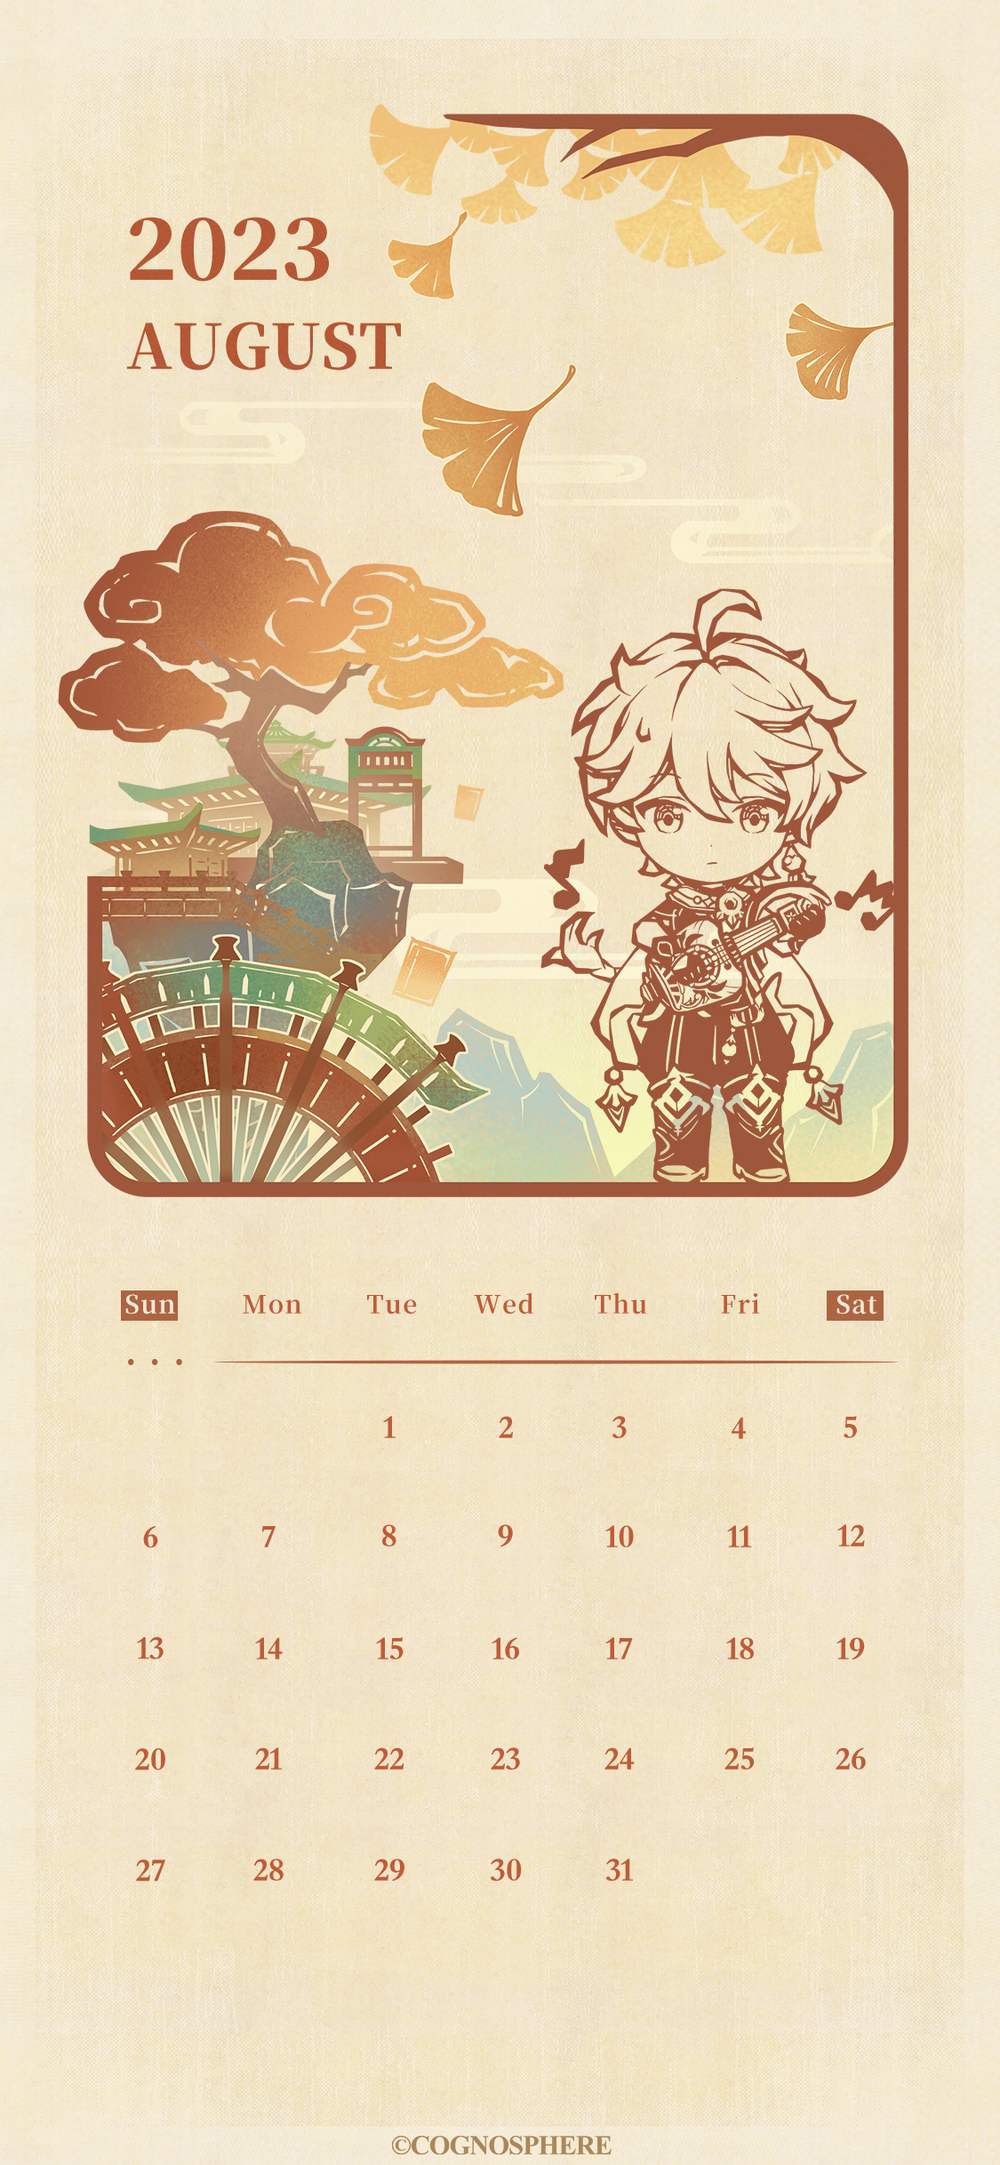 Genshin Impact Lantern Rite 2023 Calendar and Wallpapers Shared